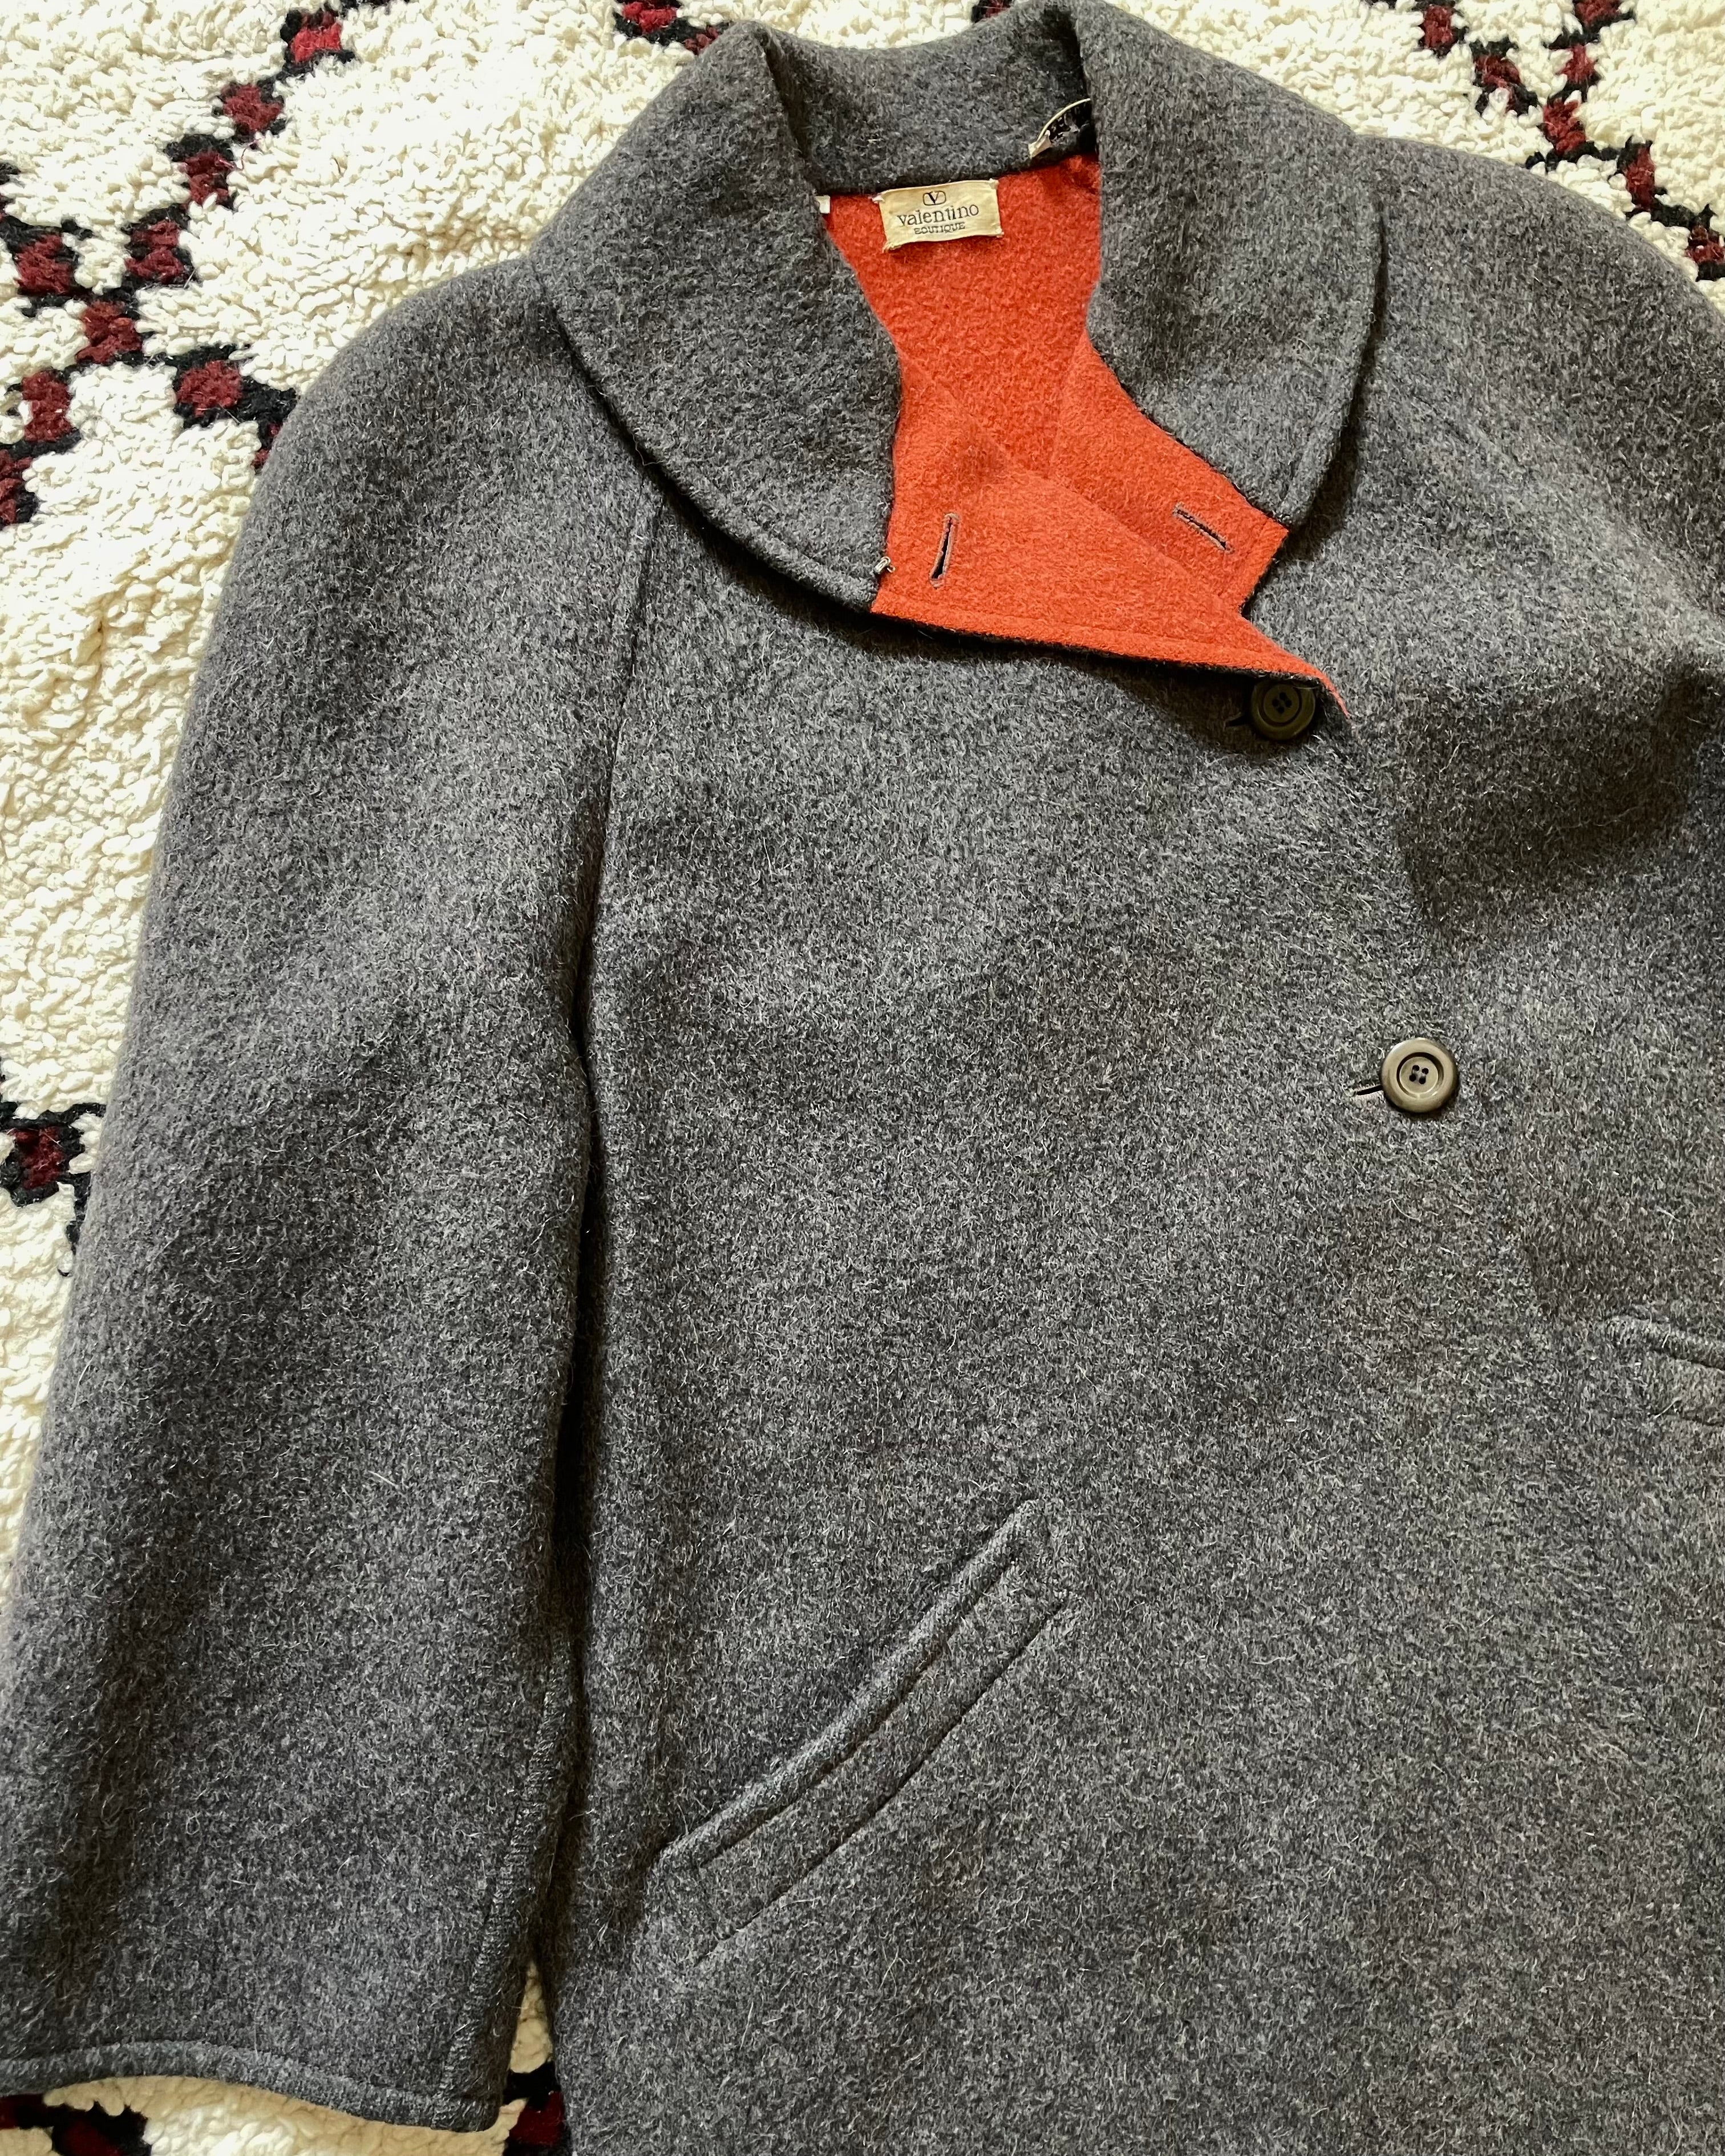 Vintage VALENTINO Felted Wool Grey and Orange Coat L